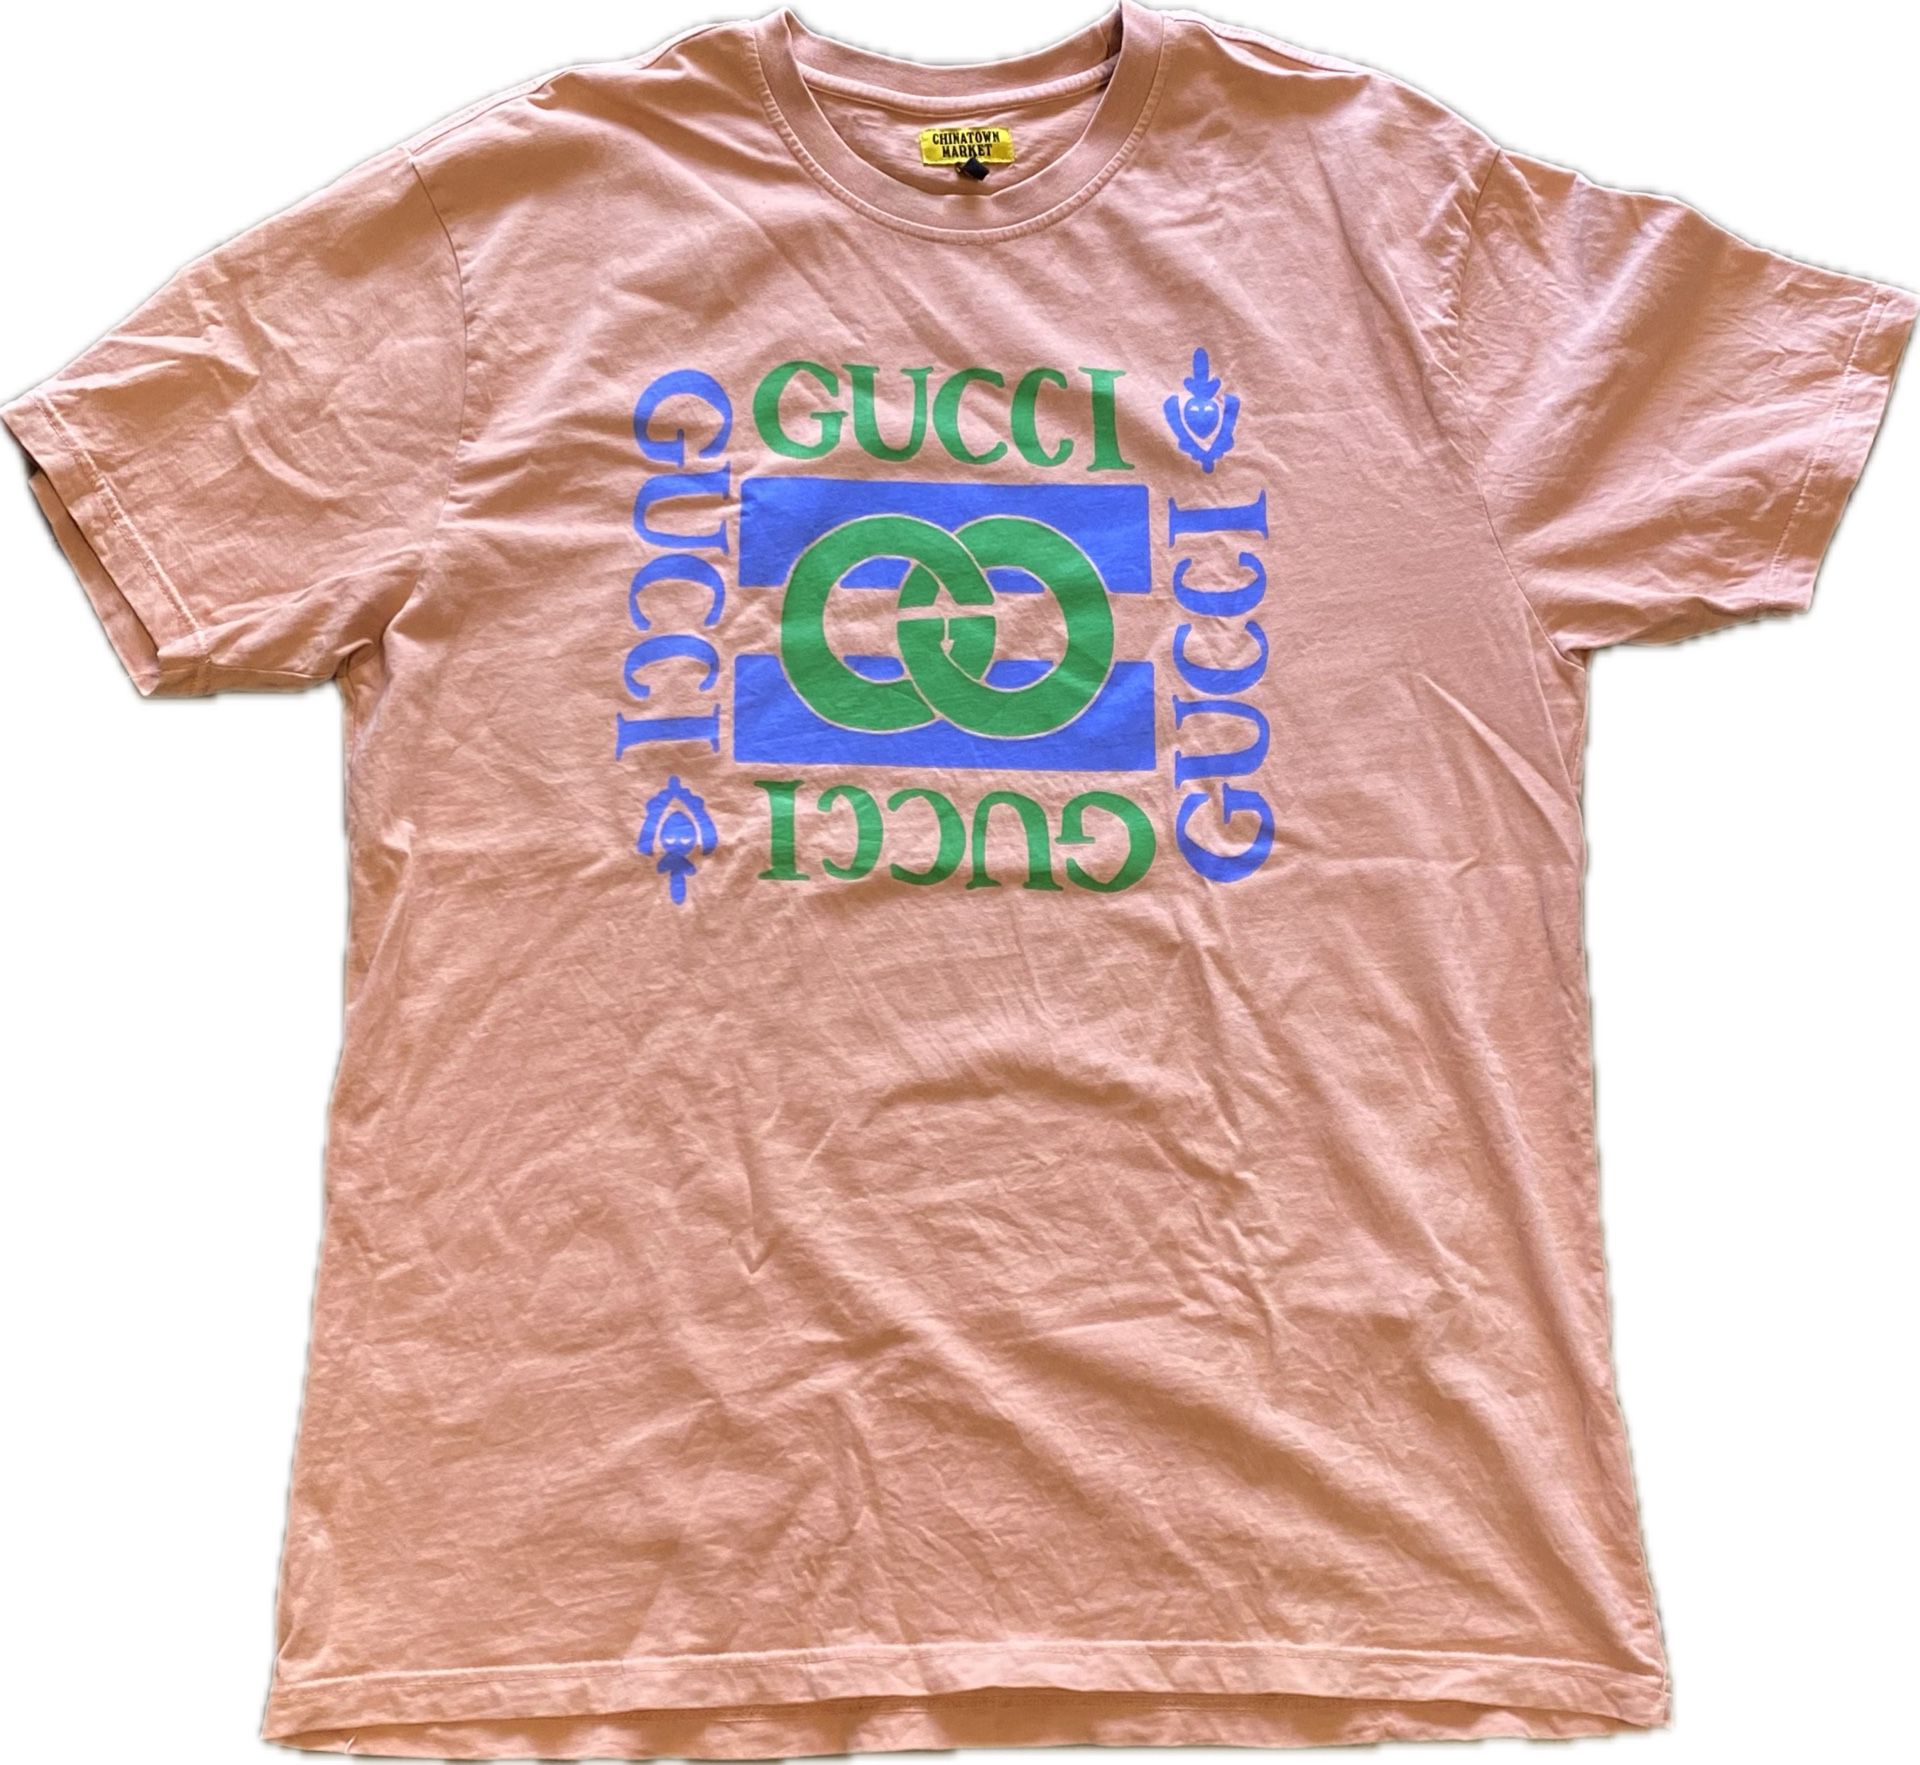 Chinatown Market Gucci Bootleg Sleeve Shirt T-shirt Tee Size XXL 2XL